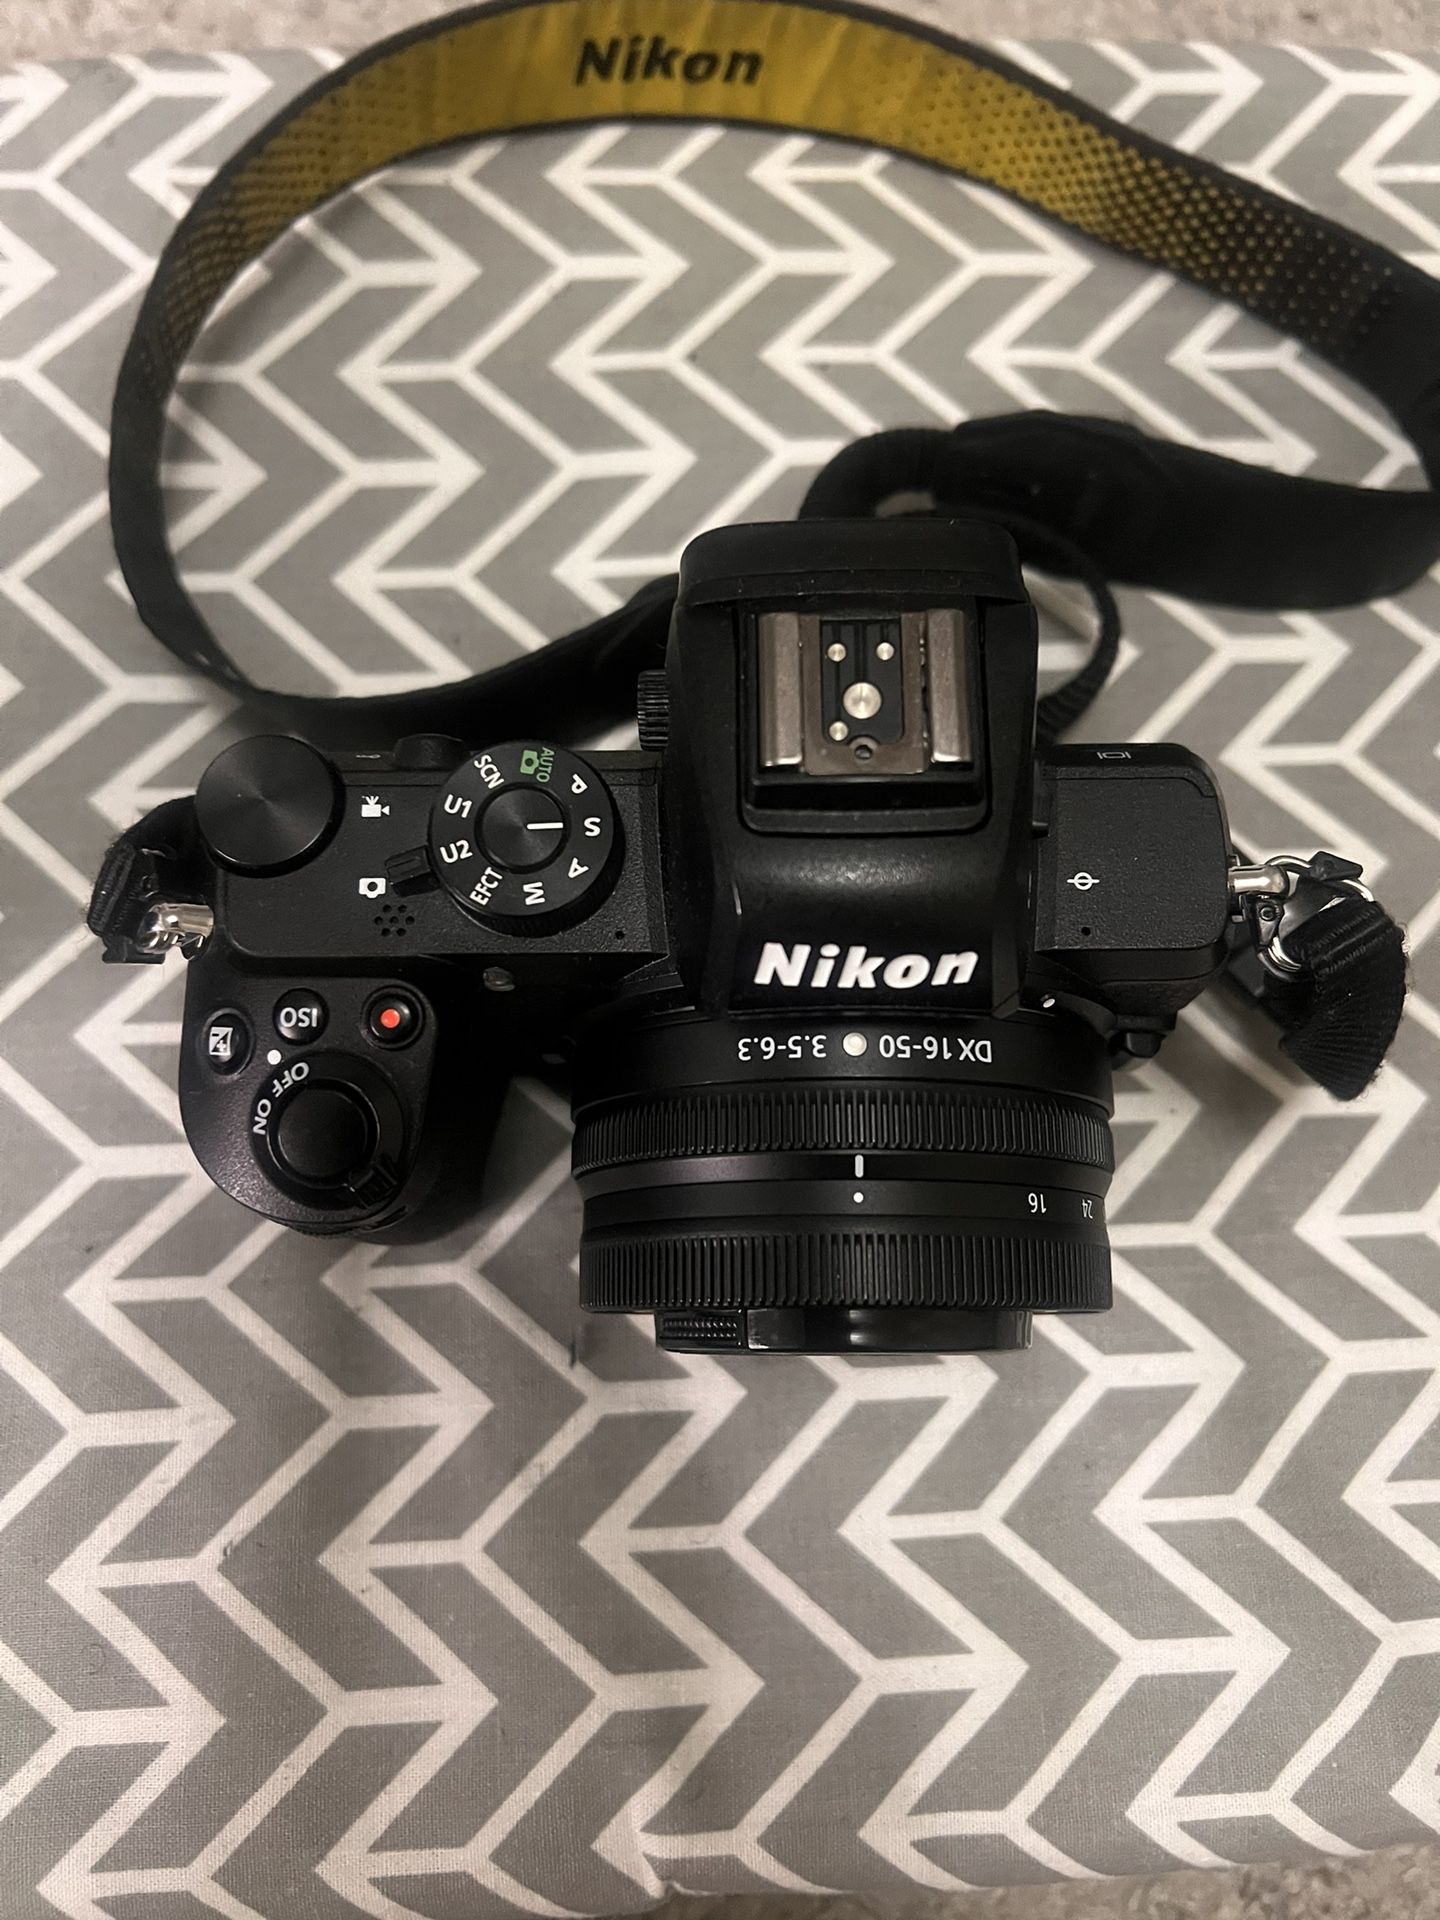 Nikon Z50 4k mirrorless camera with two lenses